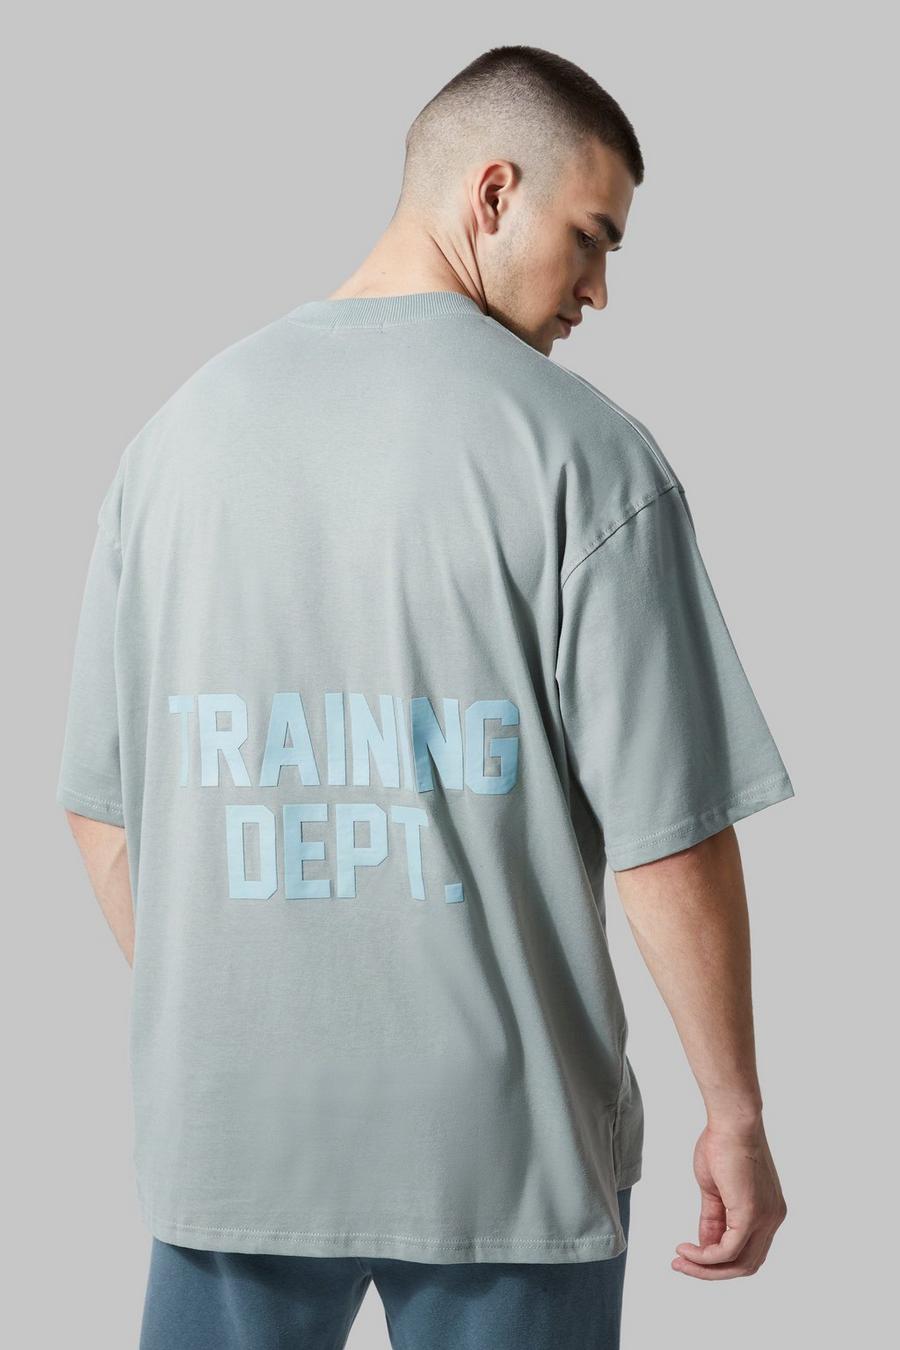 Sage green Tall Oversized Active Training Dept T-Shirt